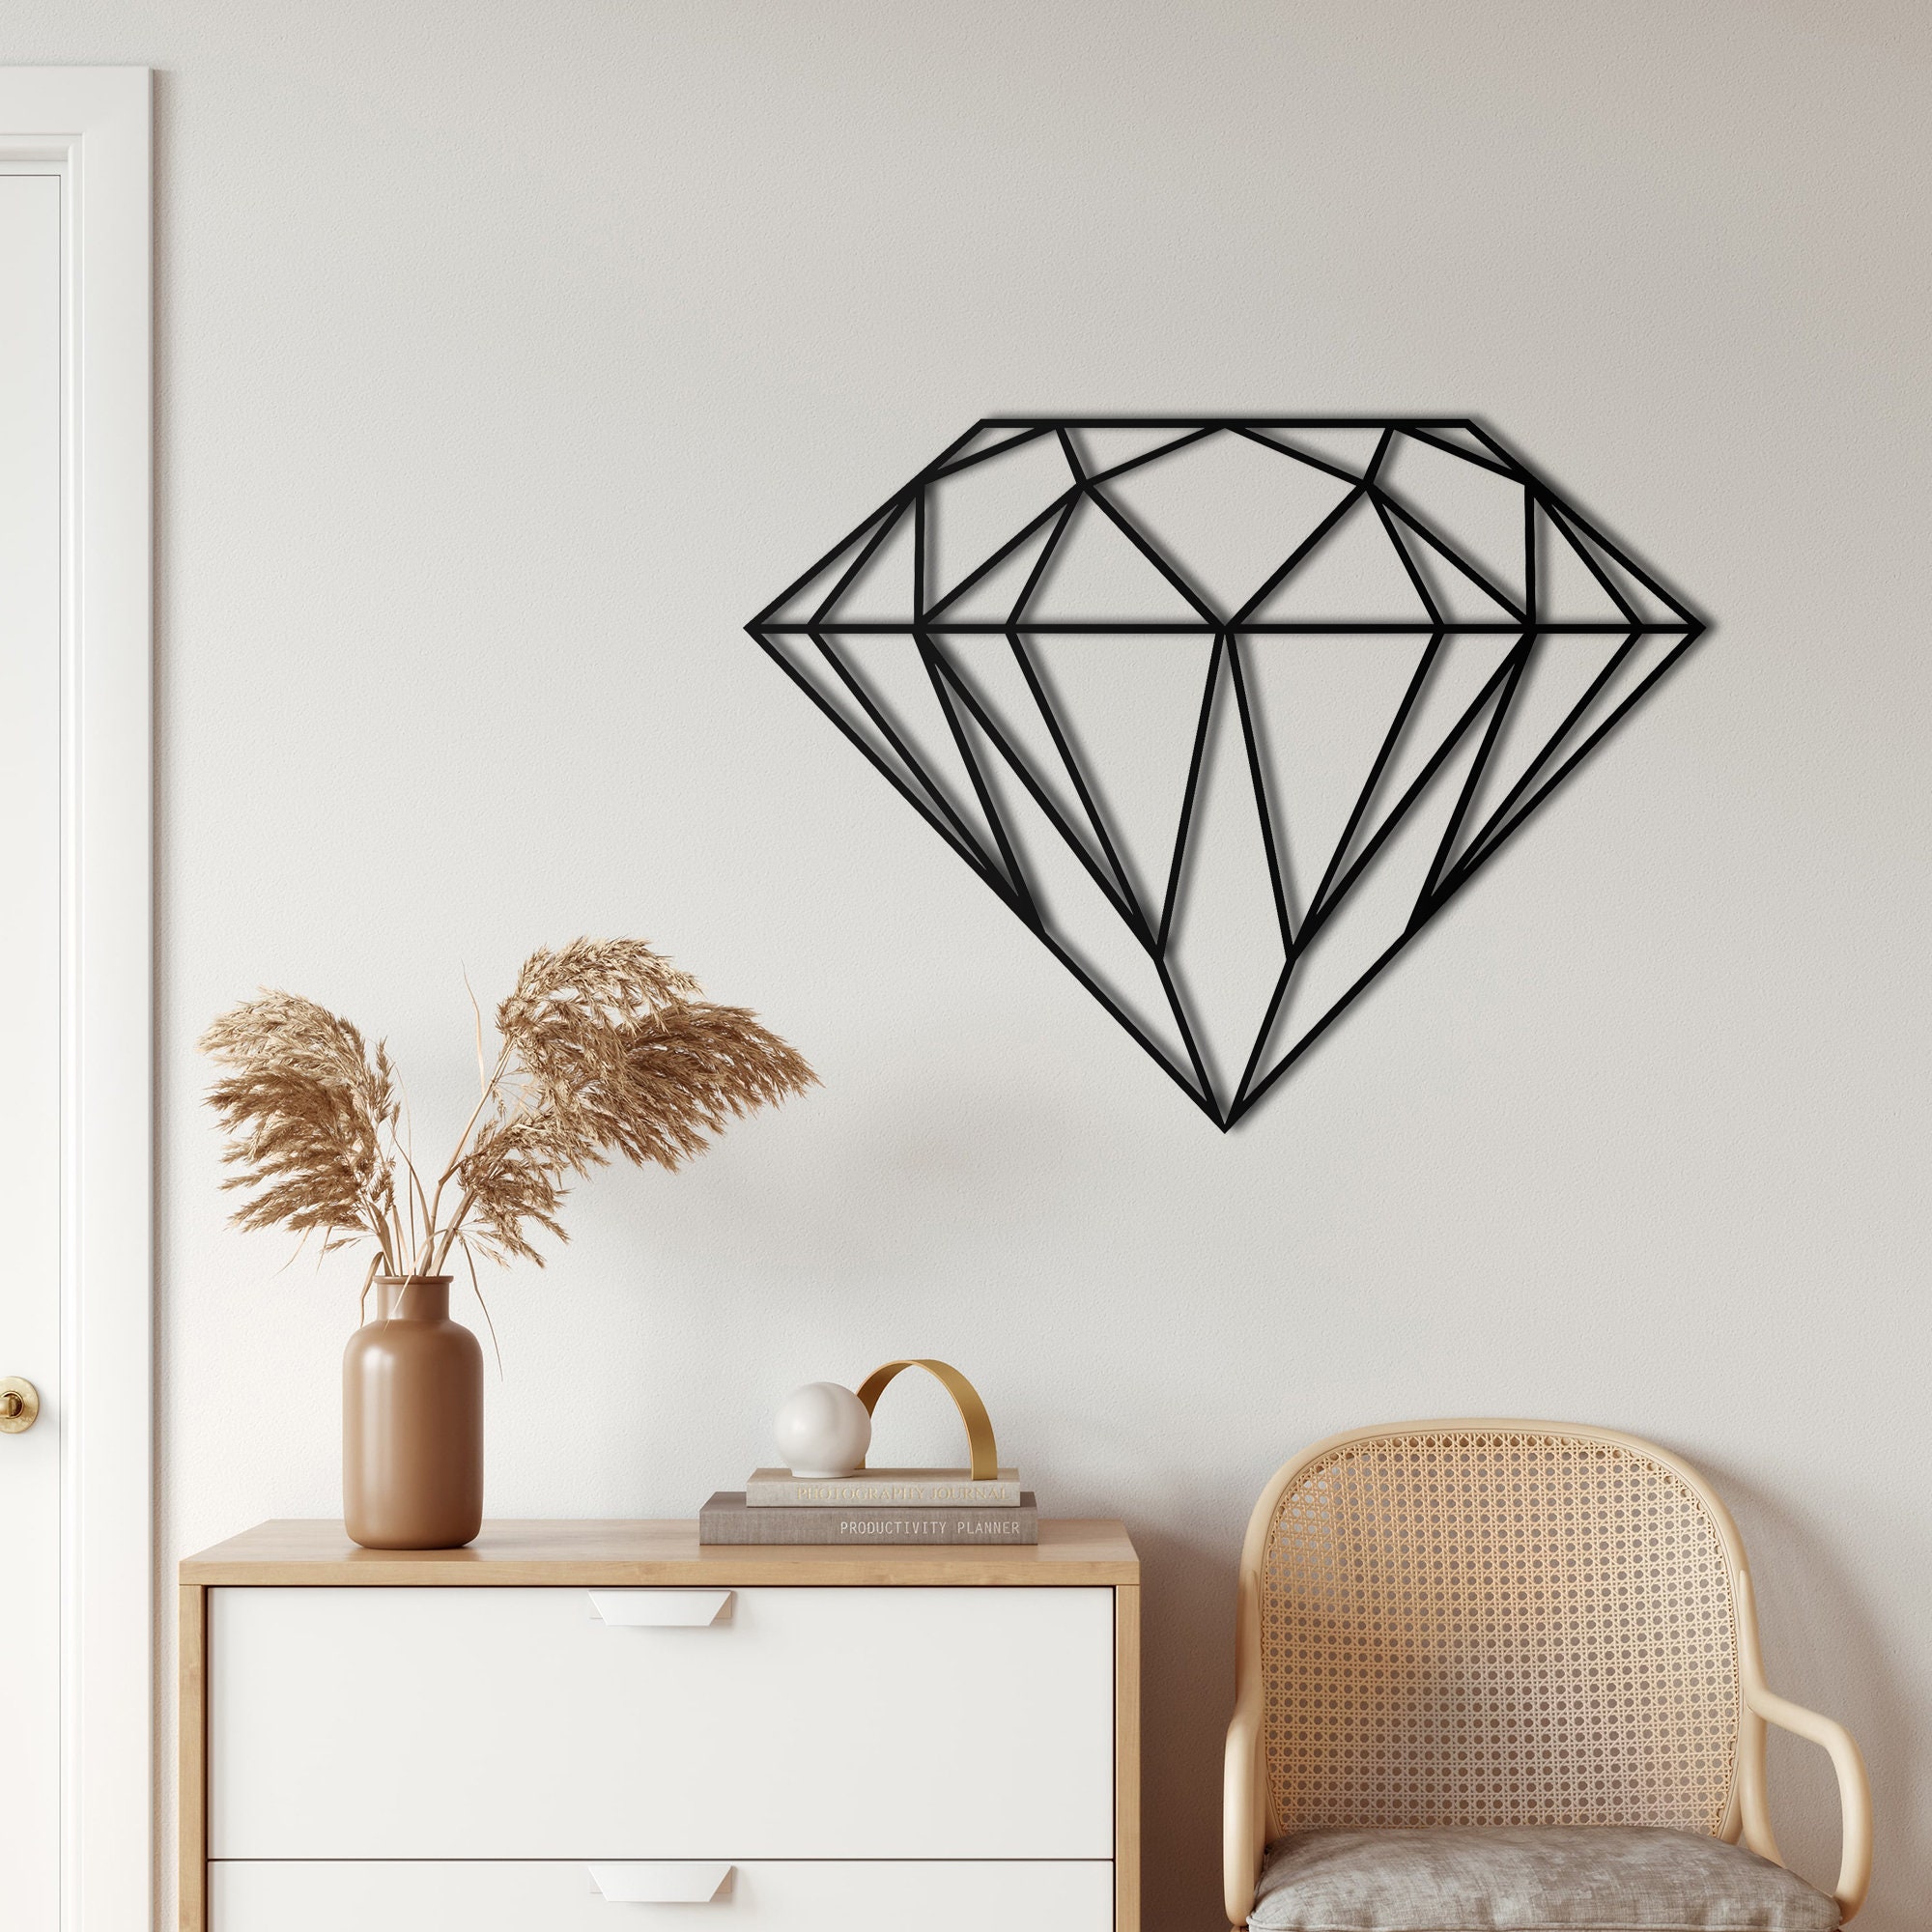 Special Shape Diamond Art Hanging Pendant for Home Wall Decor (Mushroom)  6.99